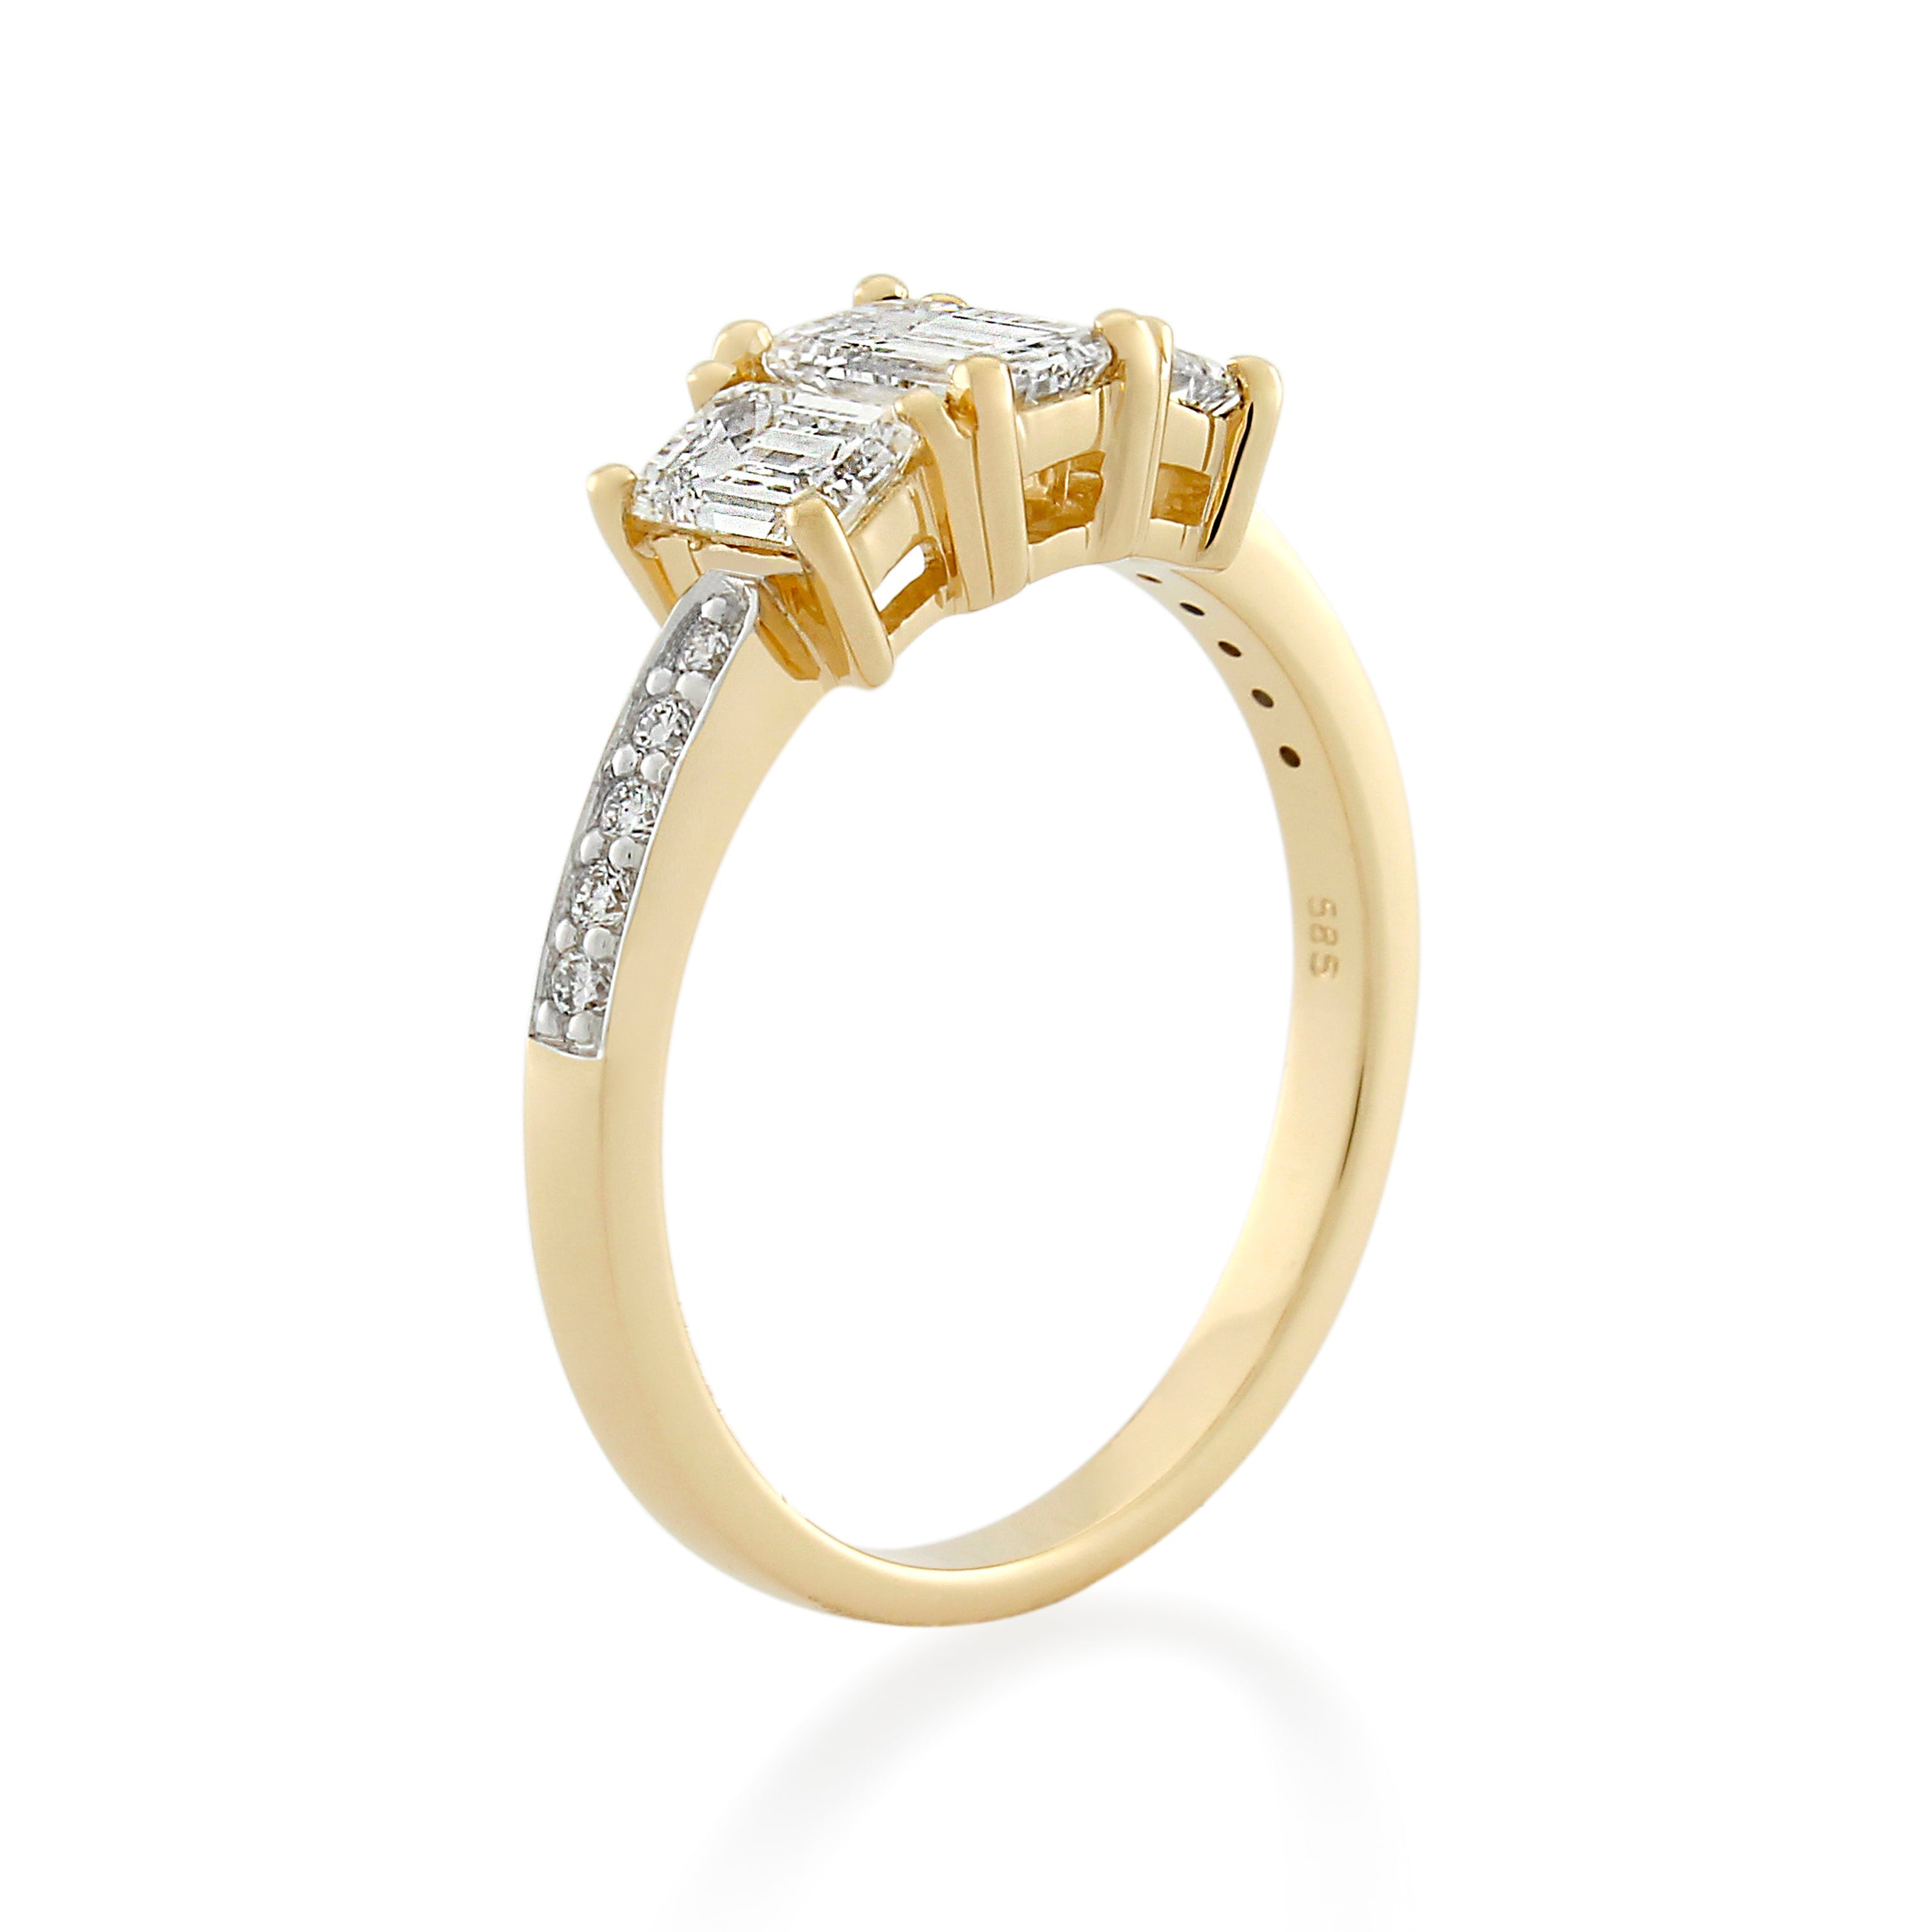 14ct Yellow Gold Diamond Ring 1.35ct TW